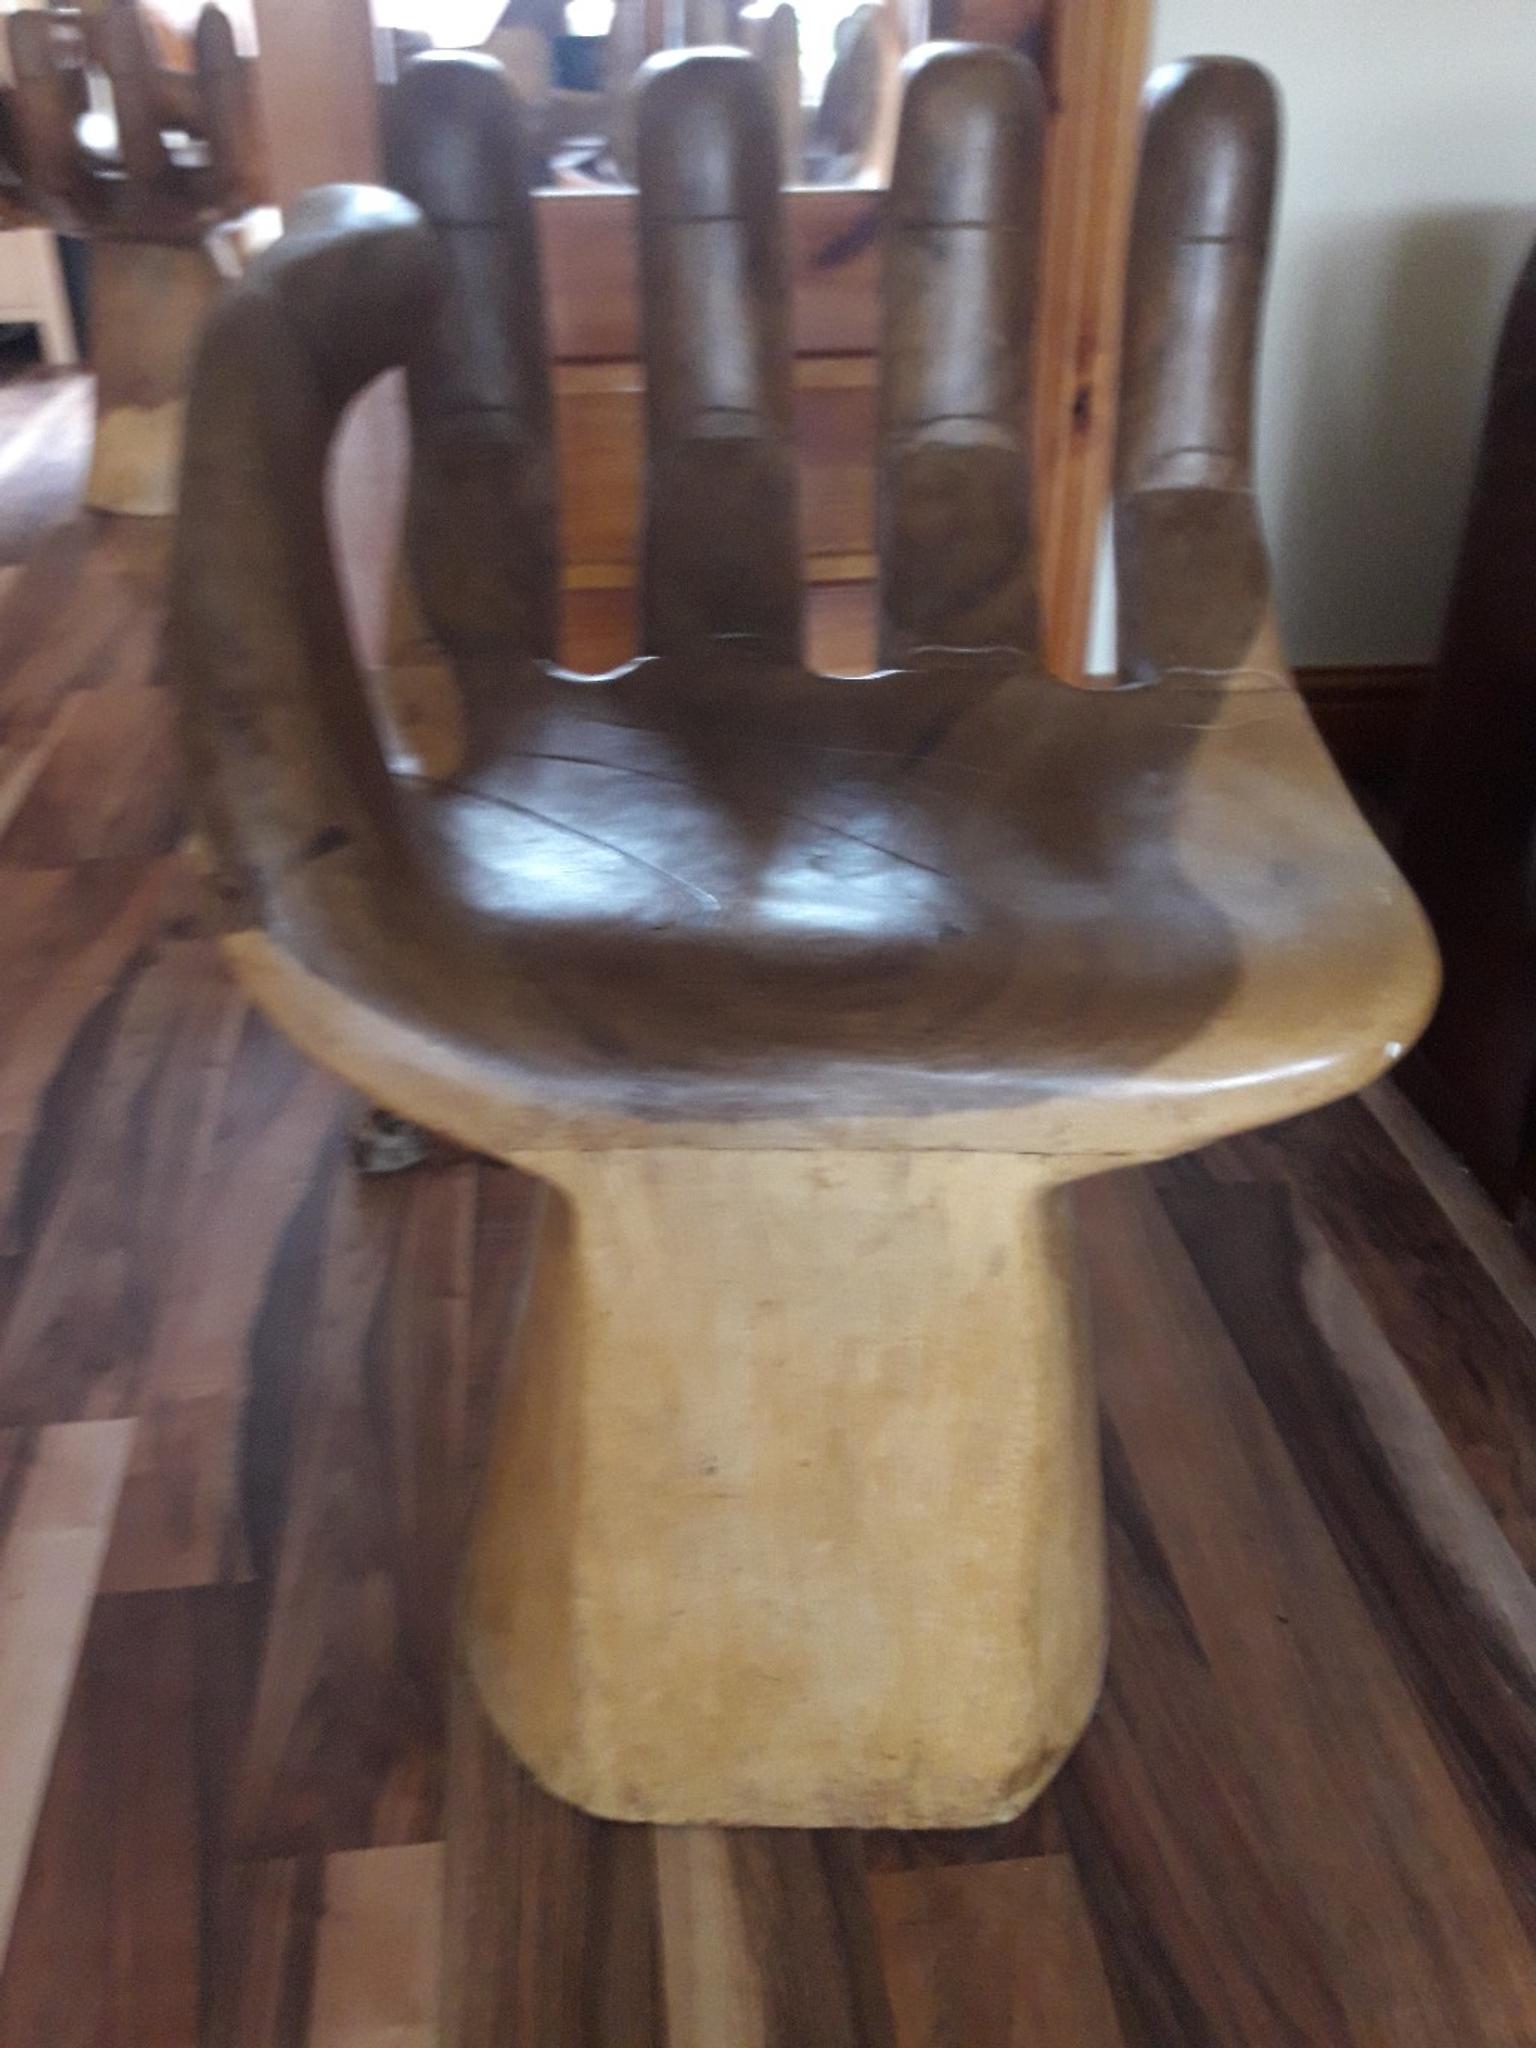 Unusual Suar Wood Dining Table Chairs In Cv10 Nuneaton Fur 450 00 Zum Verkauf Shpock De